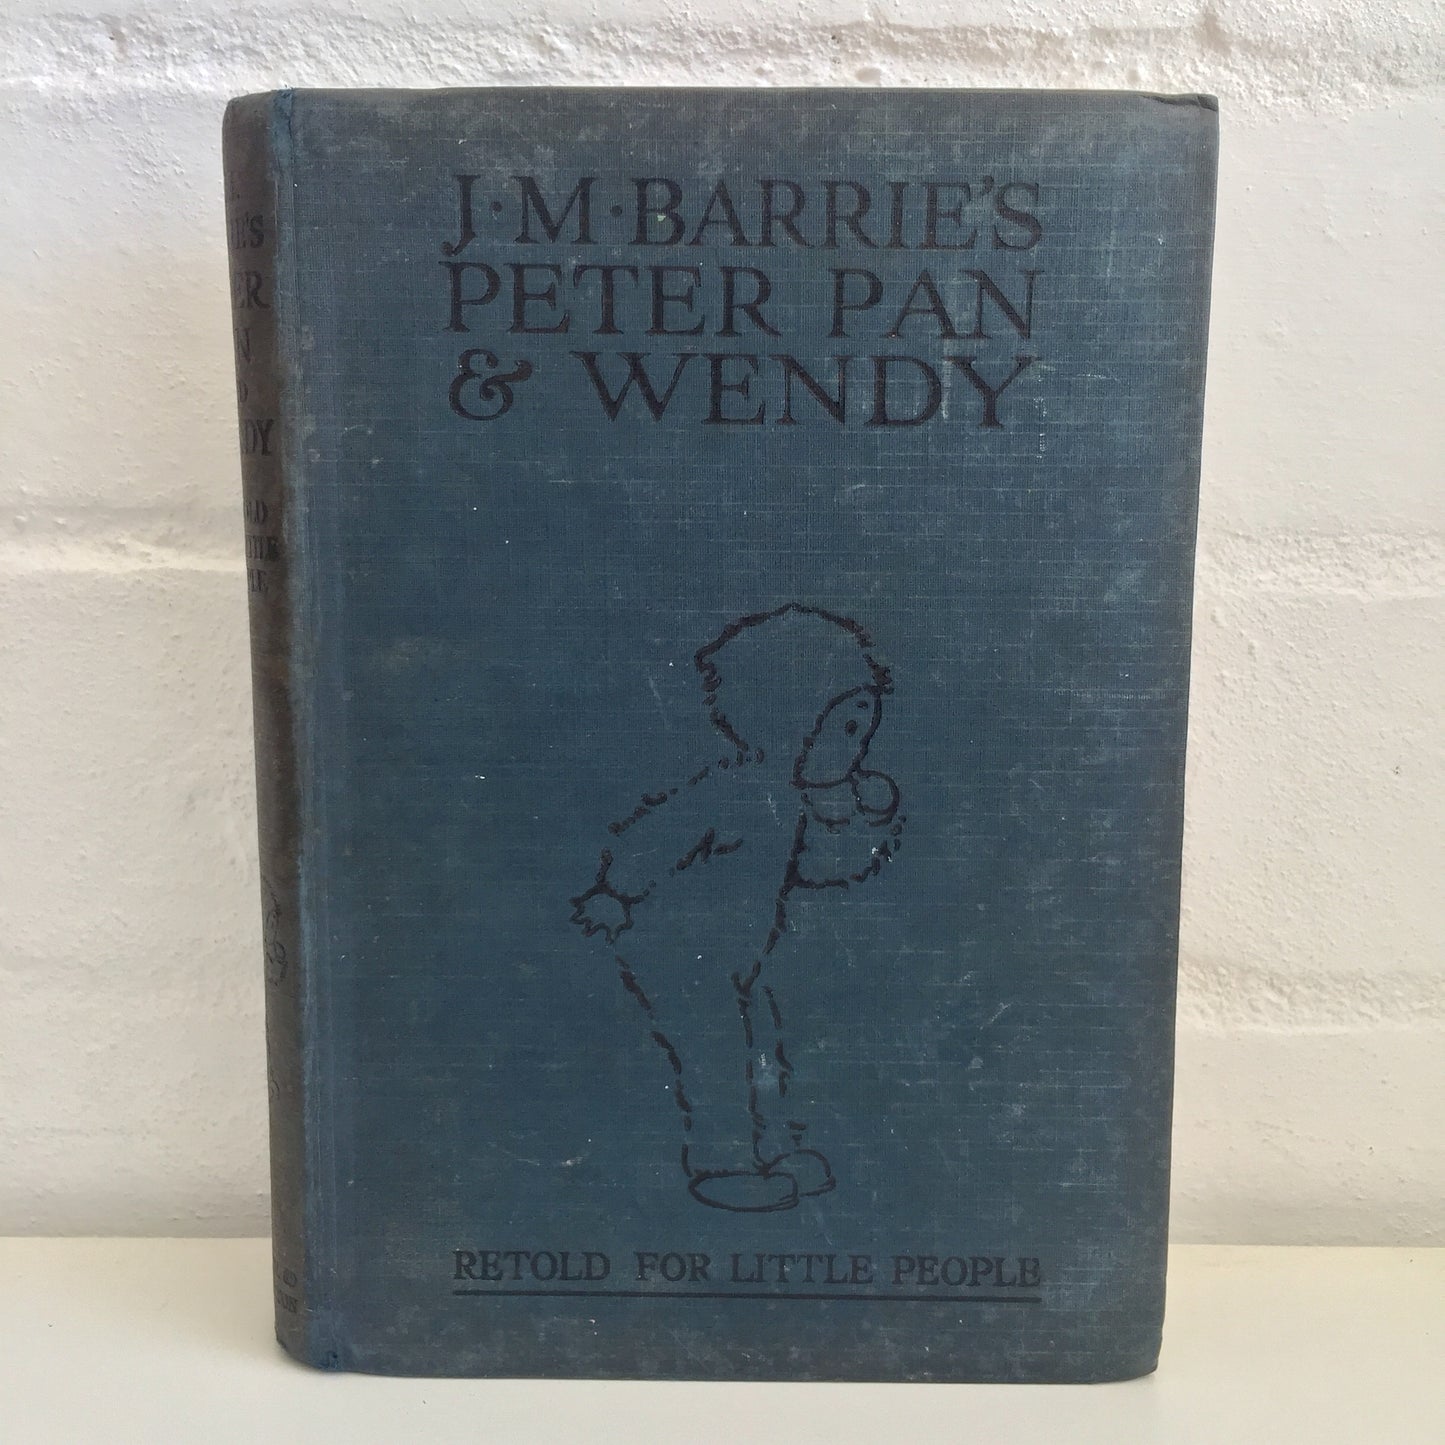 J M Barnes Peter Pan & Wendy Retold for Little People